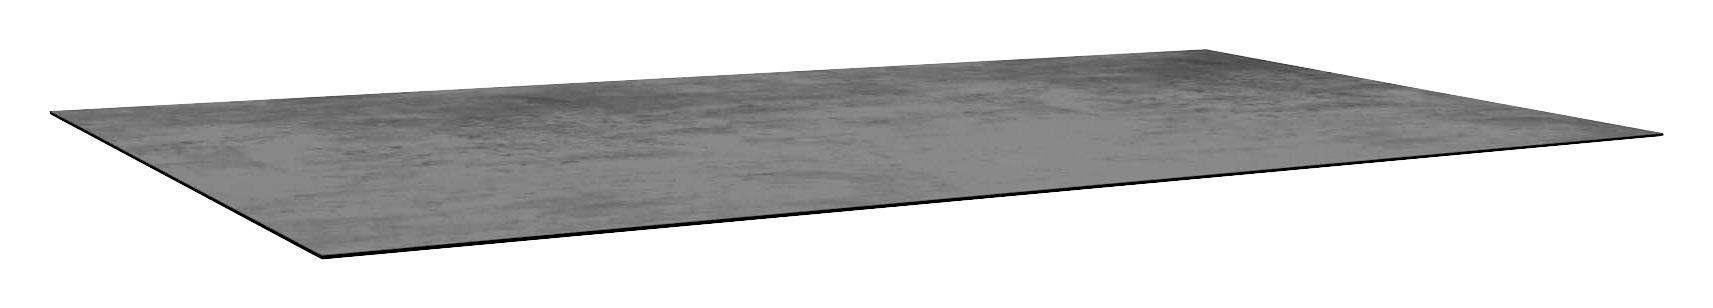 TISCHPLATTE Grau  - Grau, Design, Kunststoff (200/100/1,3cm) - Stern